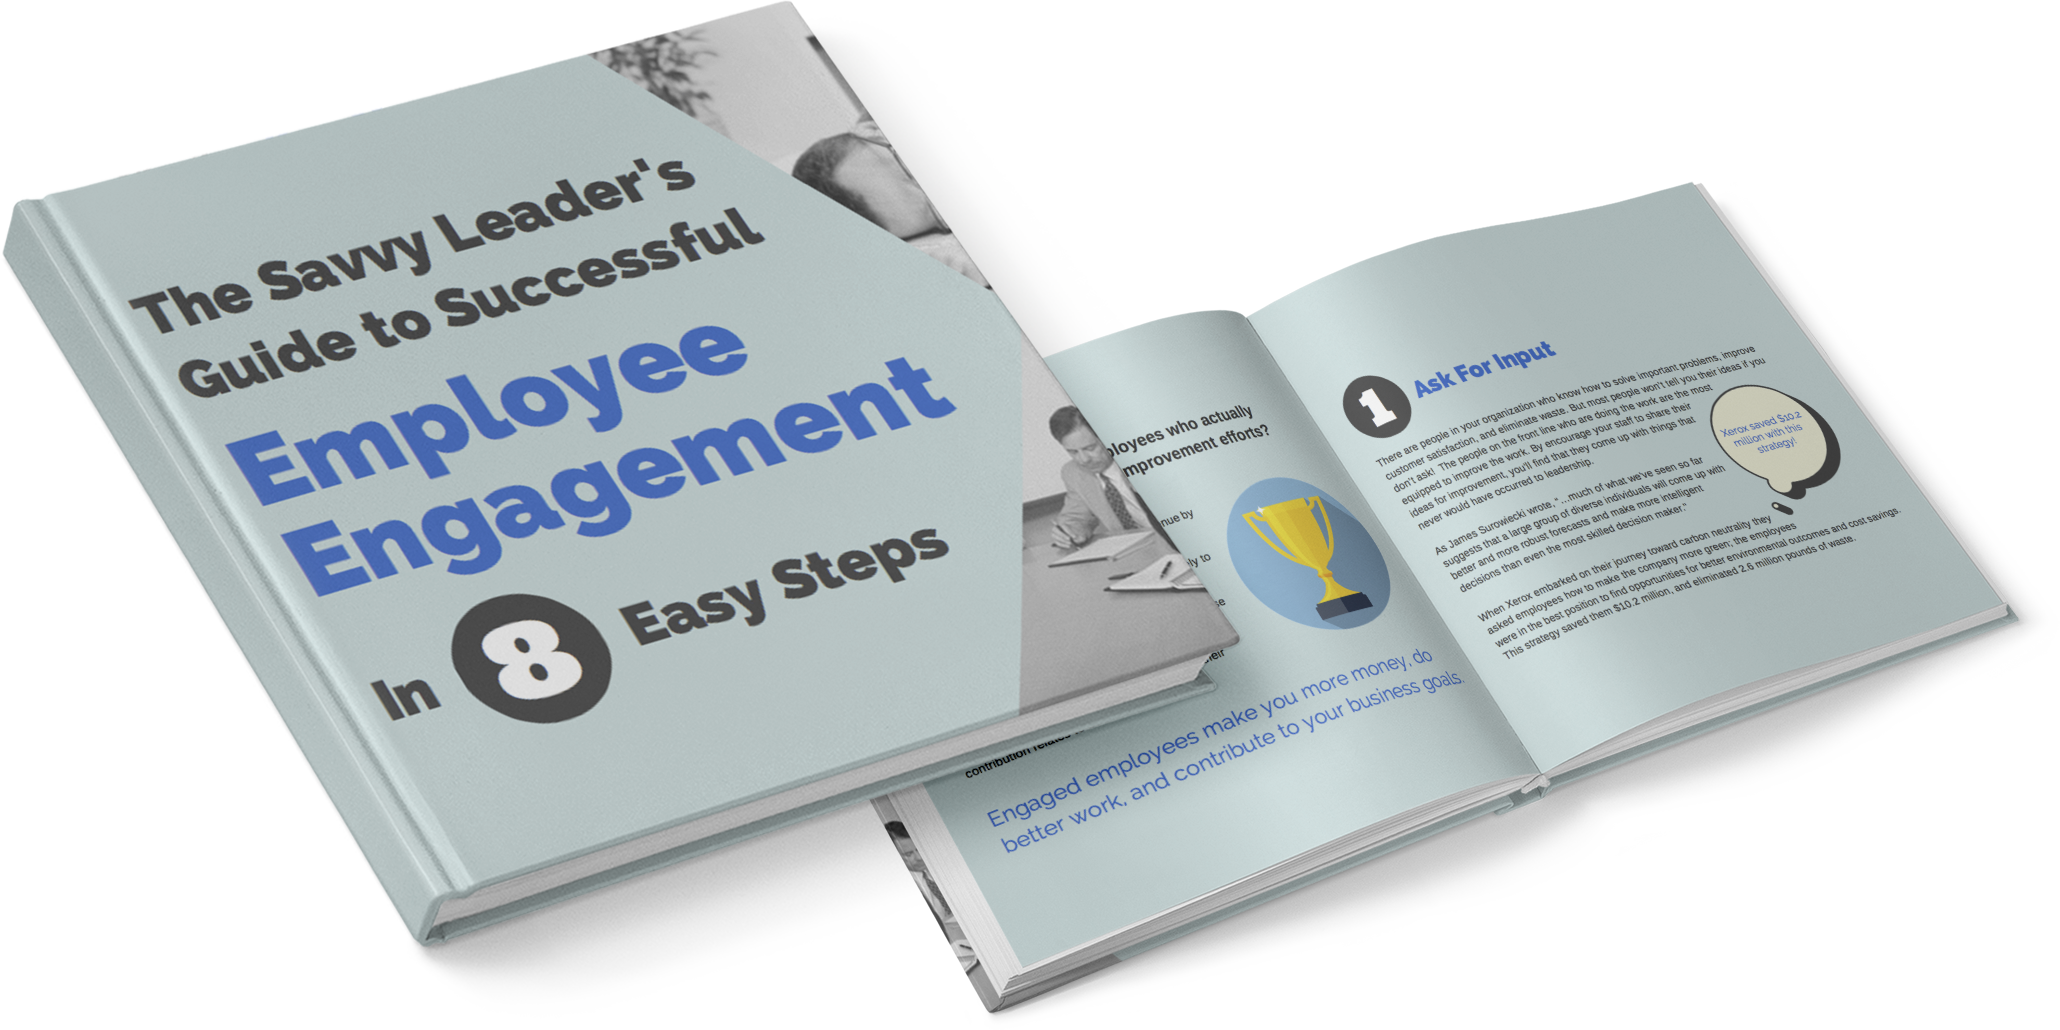 Employee Engagement eBook